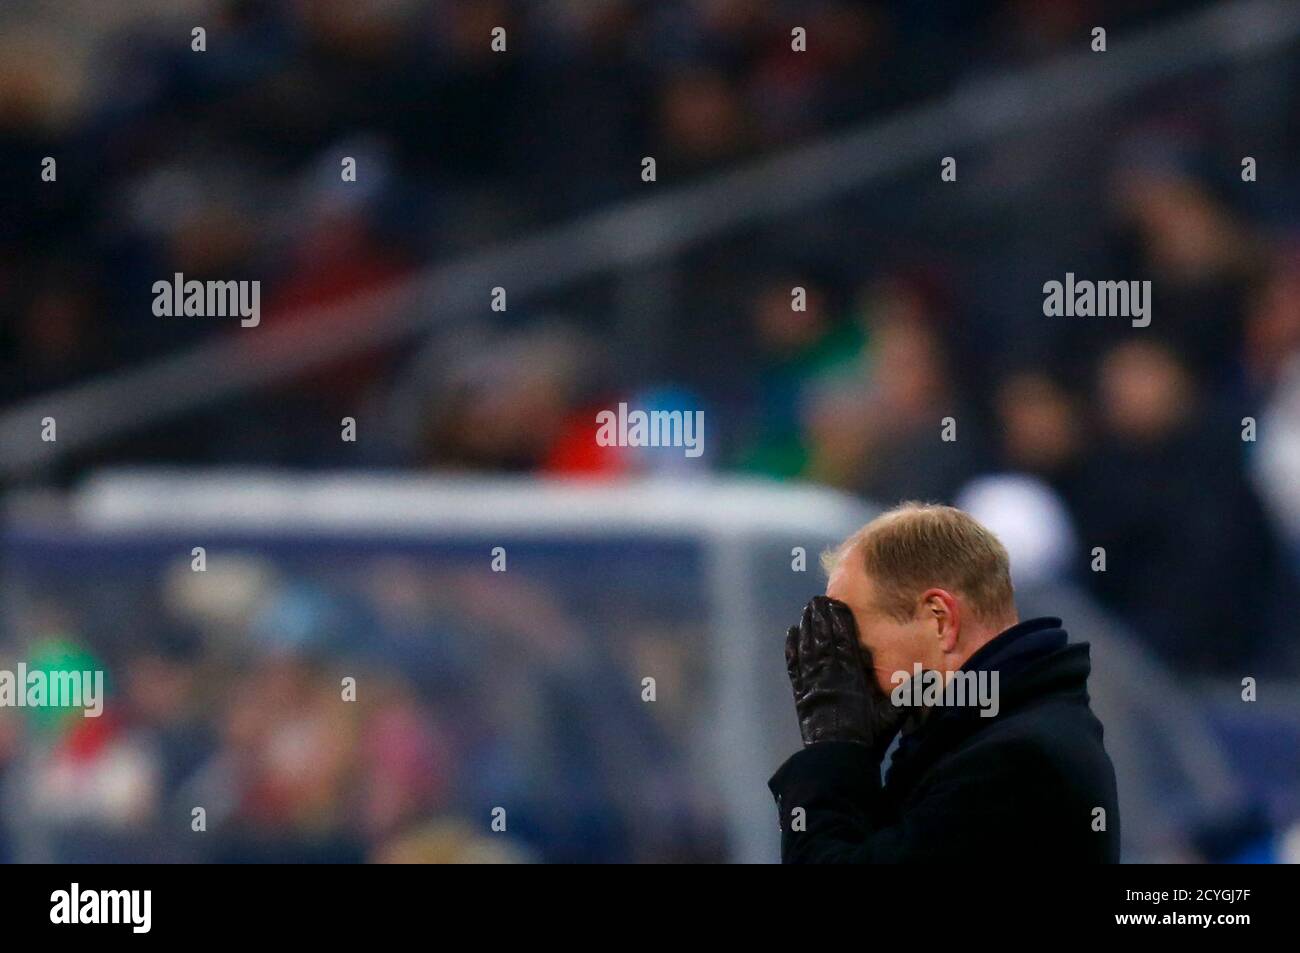 Esbjerg fB's coach Niels Frederiksen reacts during their Europa League soccer match in Salzburg December 12, 2013. REUTERS/Dominic Ebenbichler  (AUSTRIA - Tags: SPORT SOCCER) Stock Photo